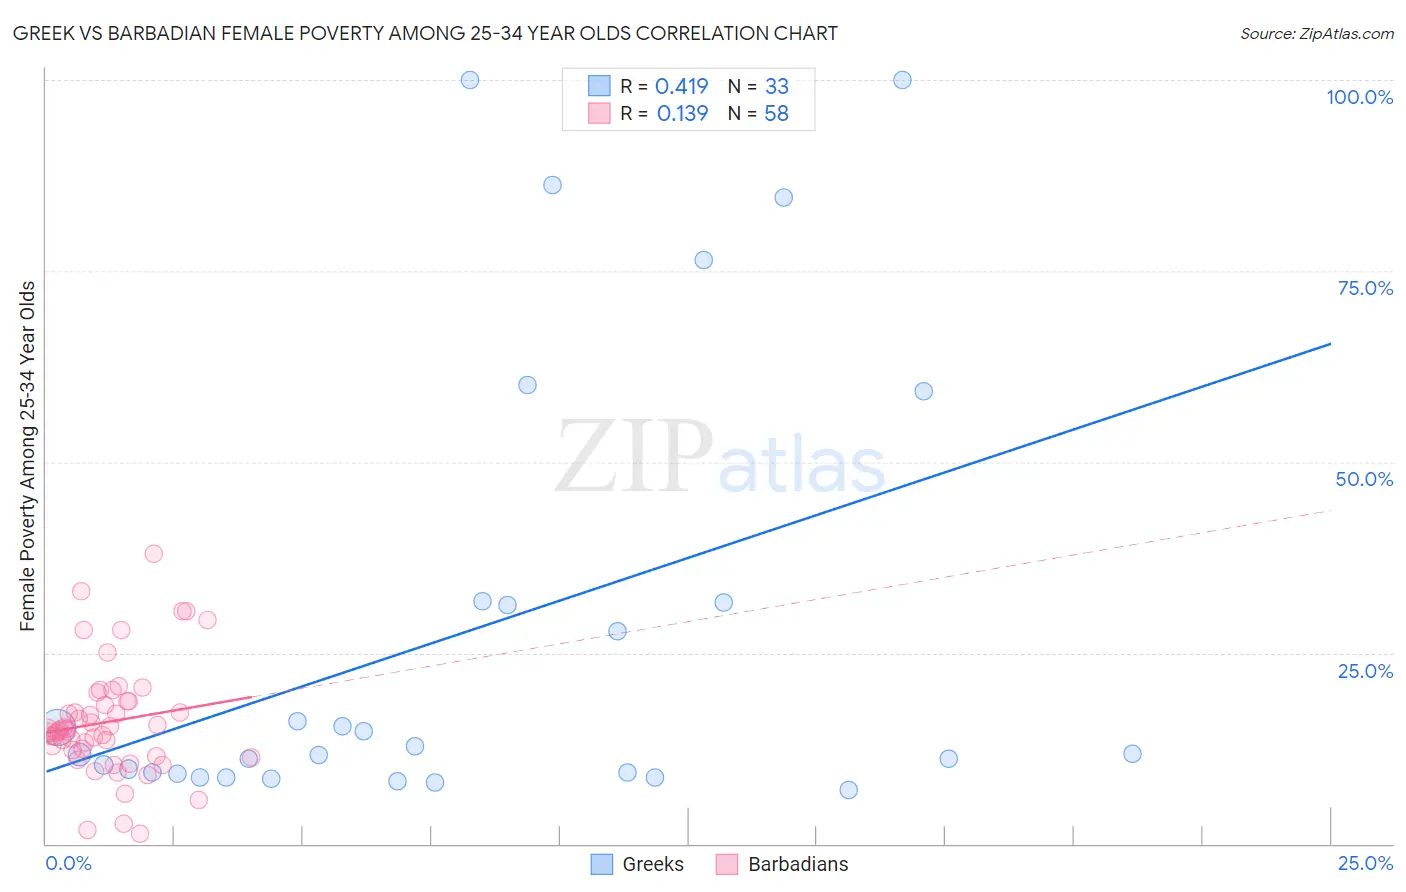 Greek vs Barbadian Female Poverty Among 25-34 Year Olds